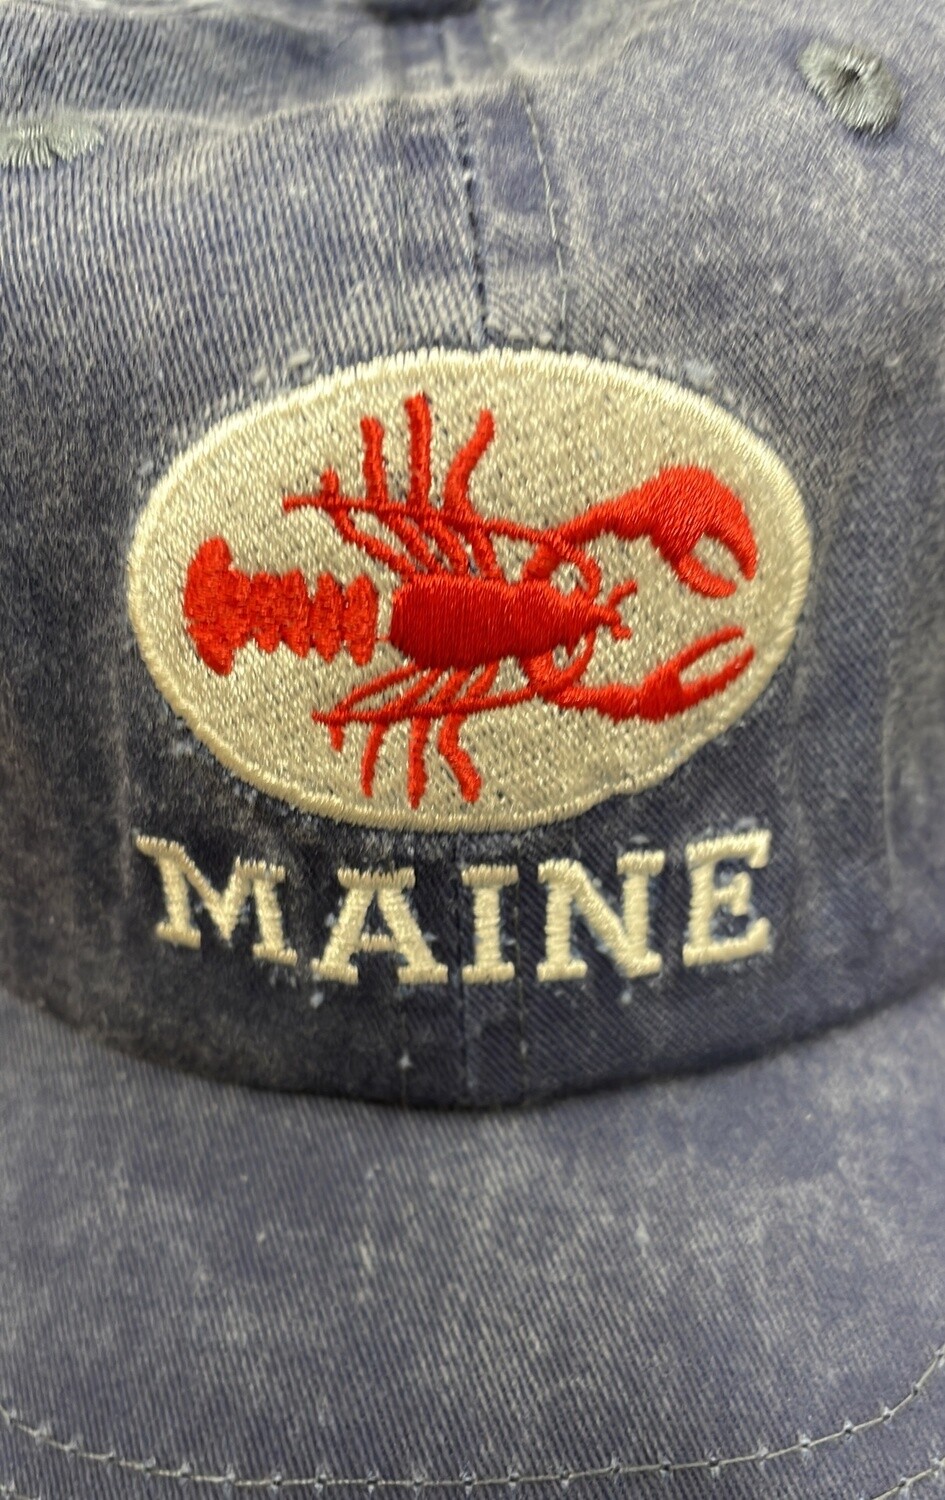 Hat - Maine Lobster (Navy)